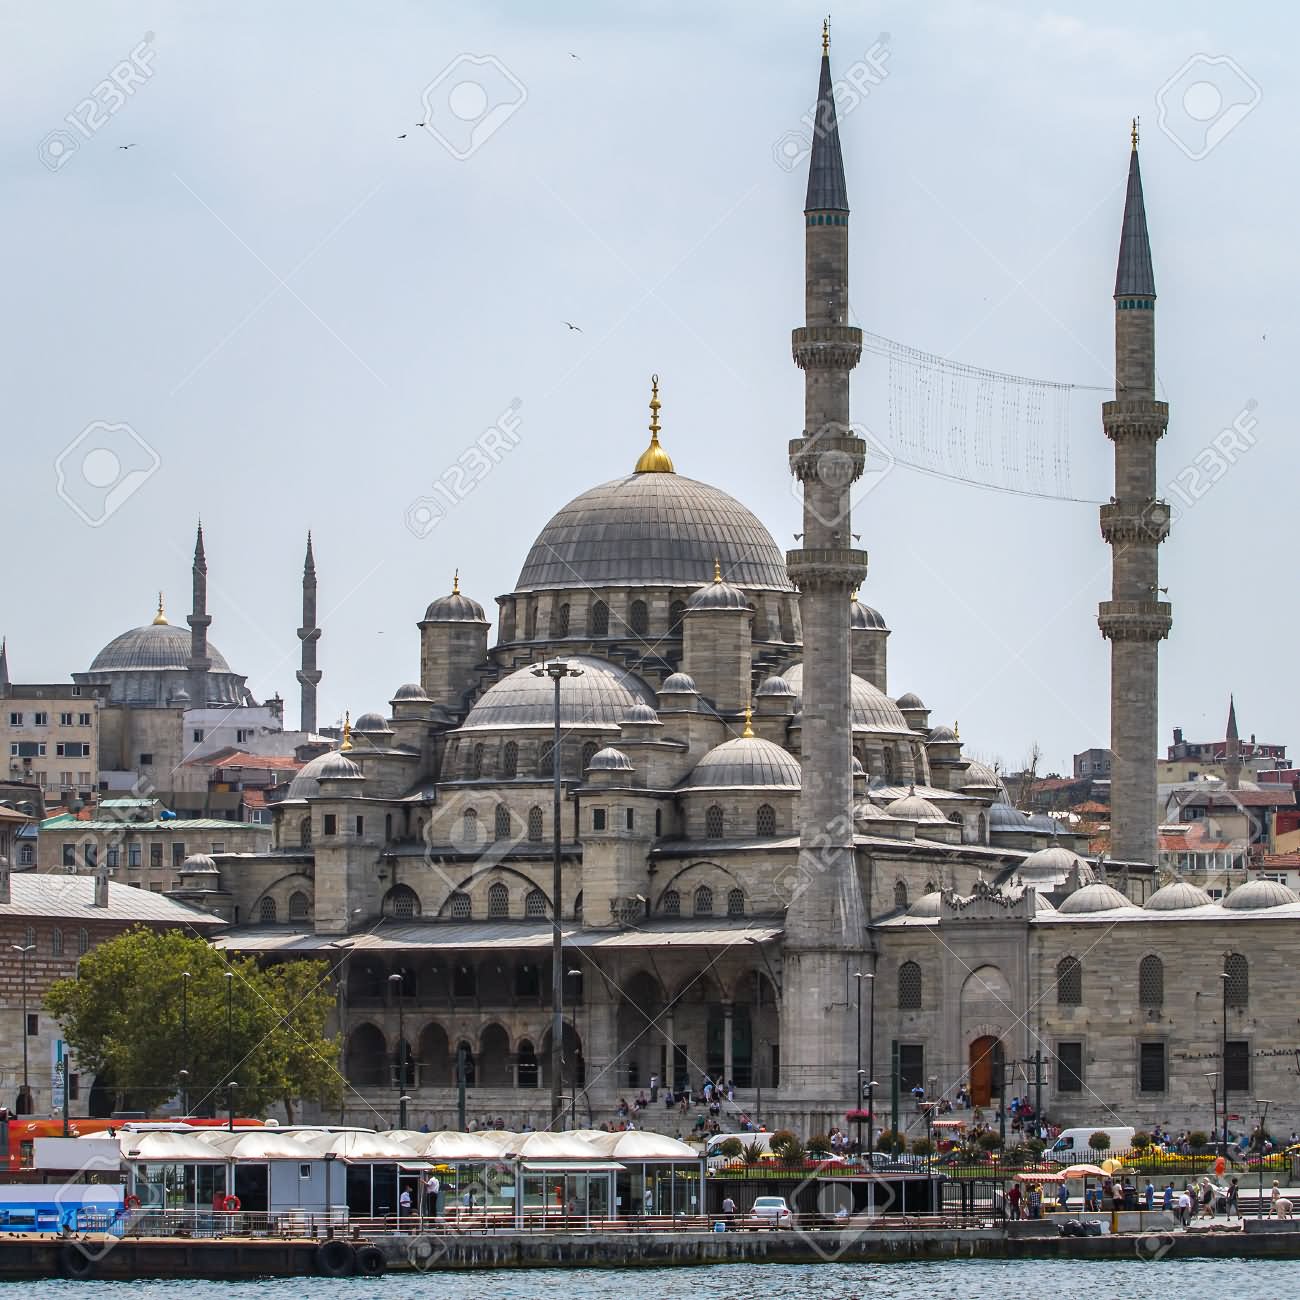 Yeni Cami In Eminonu District Of Istanbul